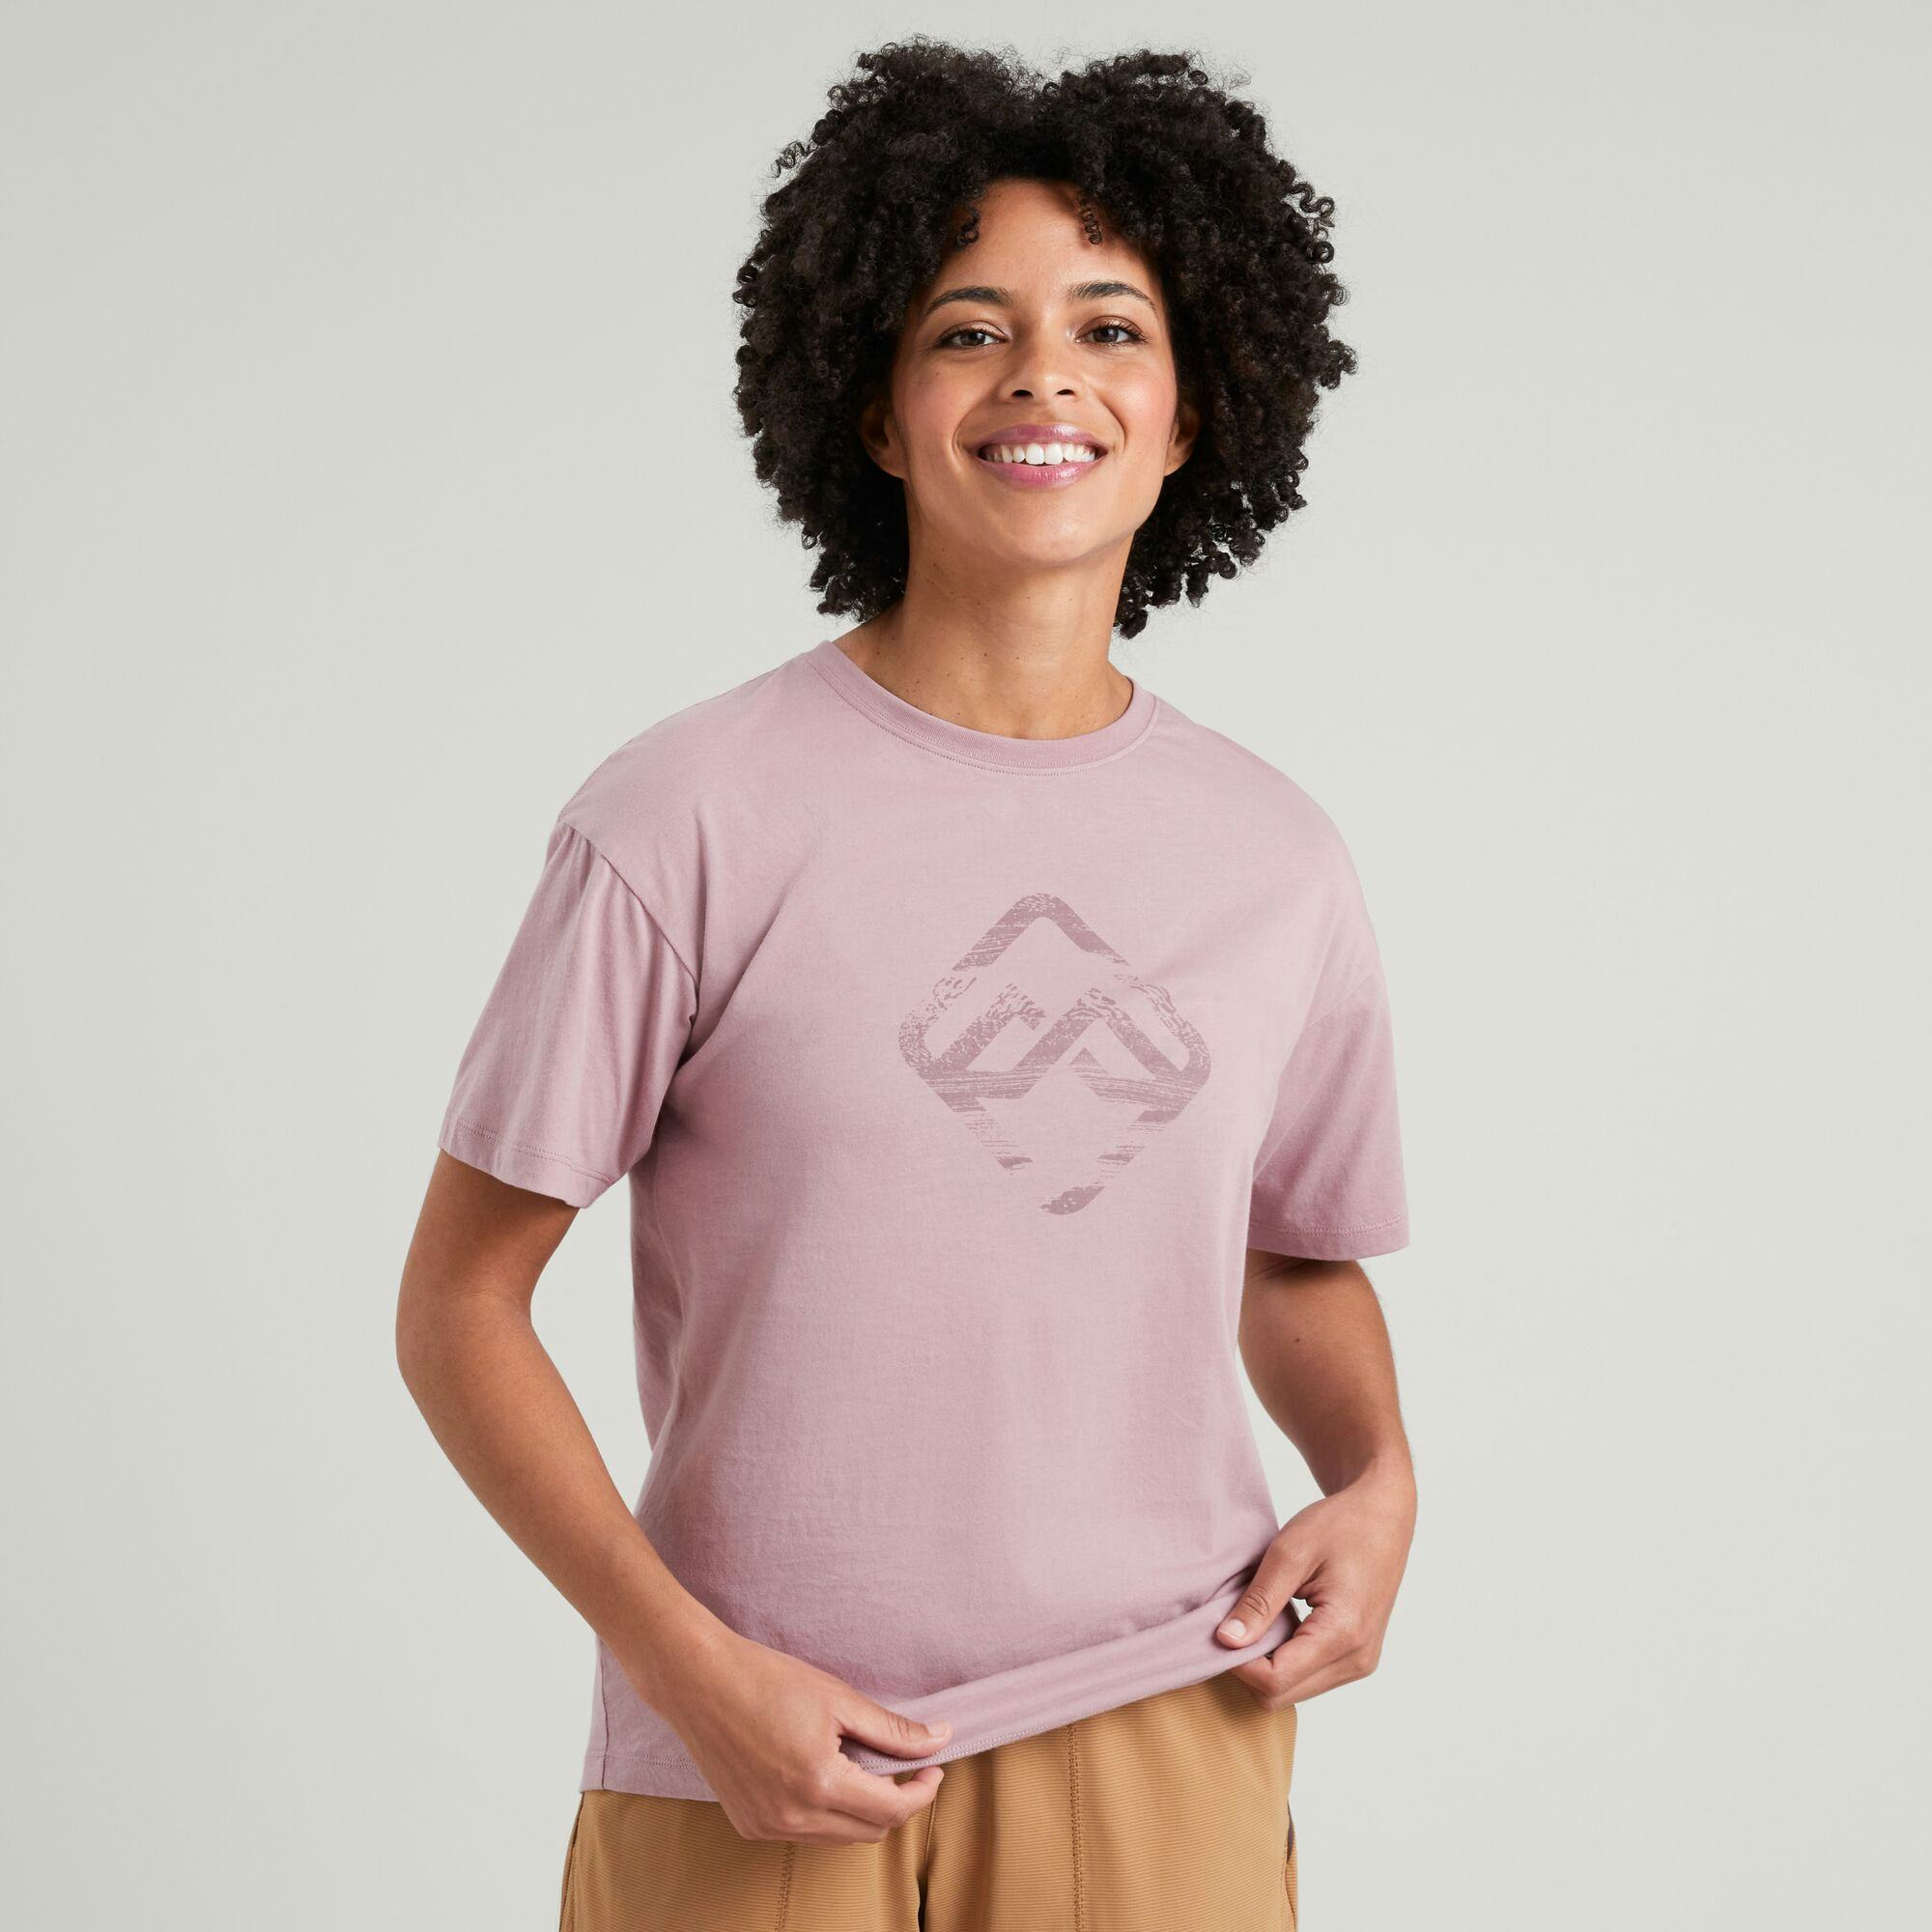 260GSM Unisex Snow Wash T-shirt-T-shirts-Women's  clothing-PODpartner:Print-on-Demand Dropshipping